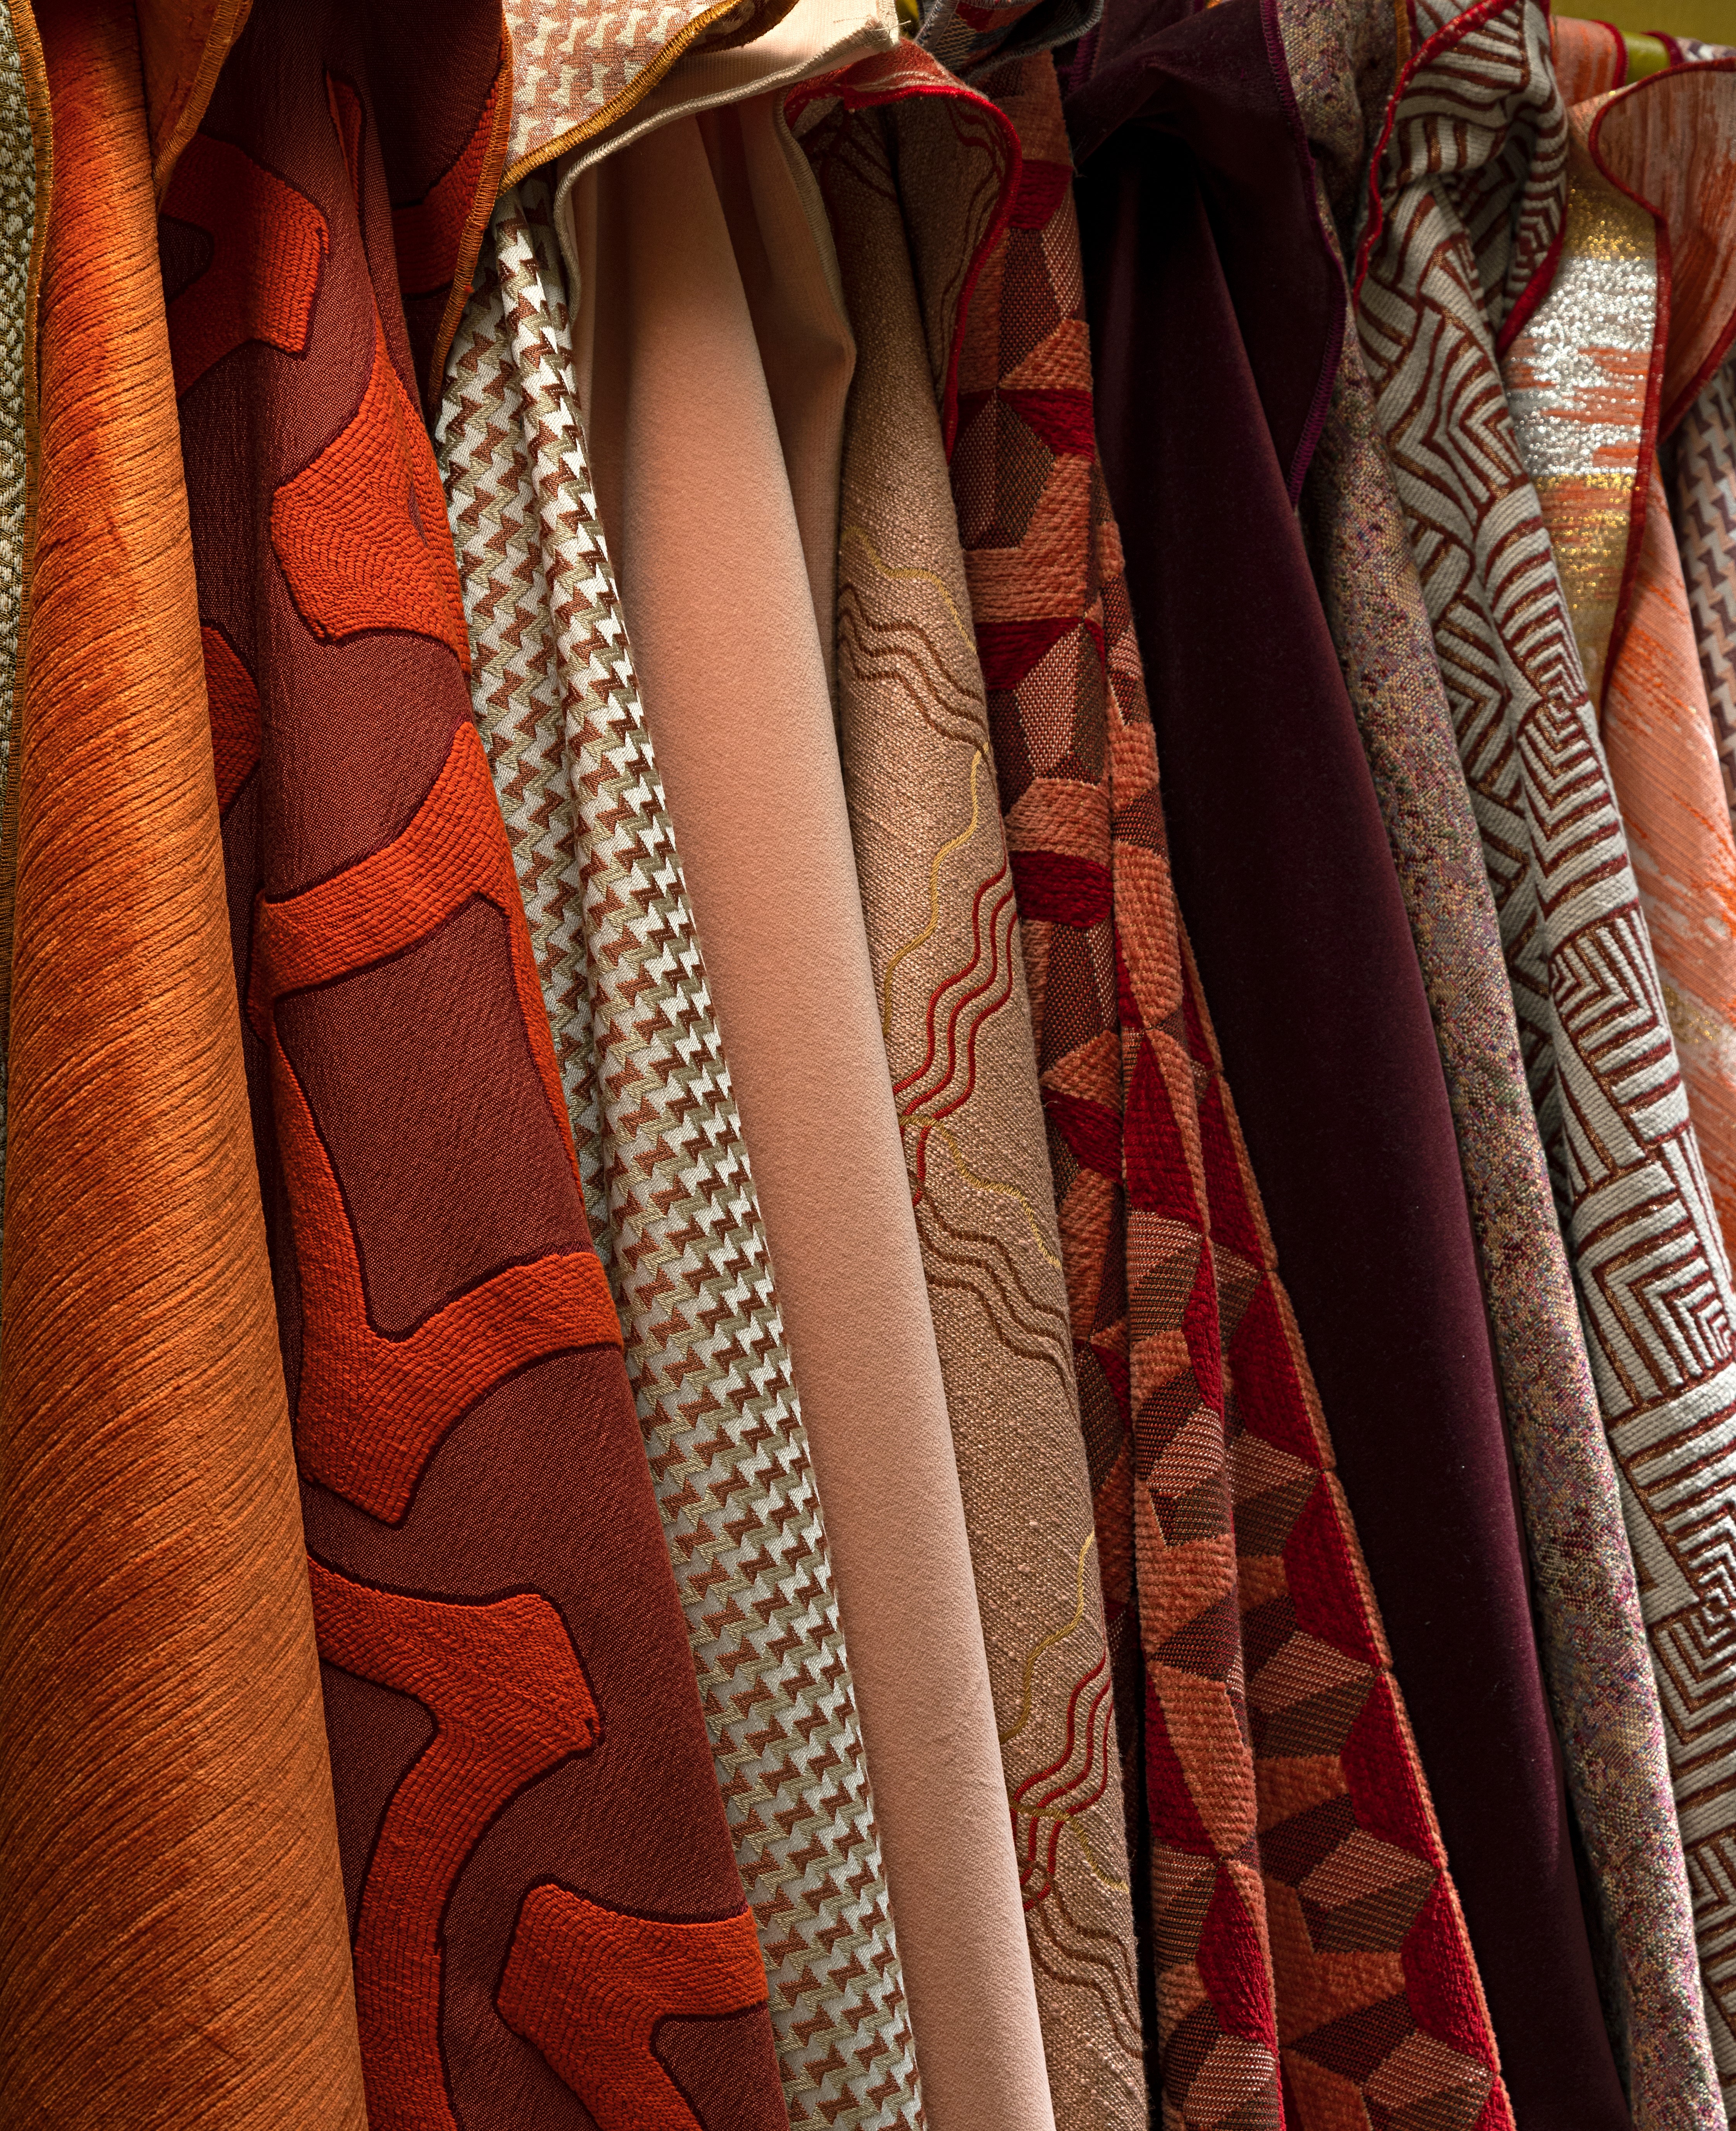 Maison&Object 2022: a selection of matching fabrics in warm brick and beige tones, photo Mattia Aquila 